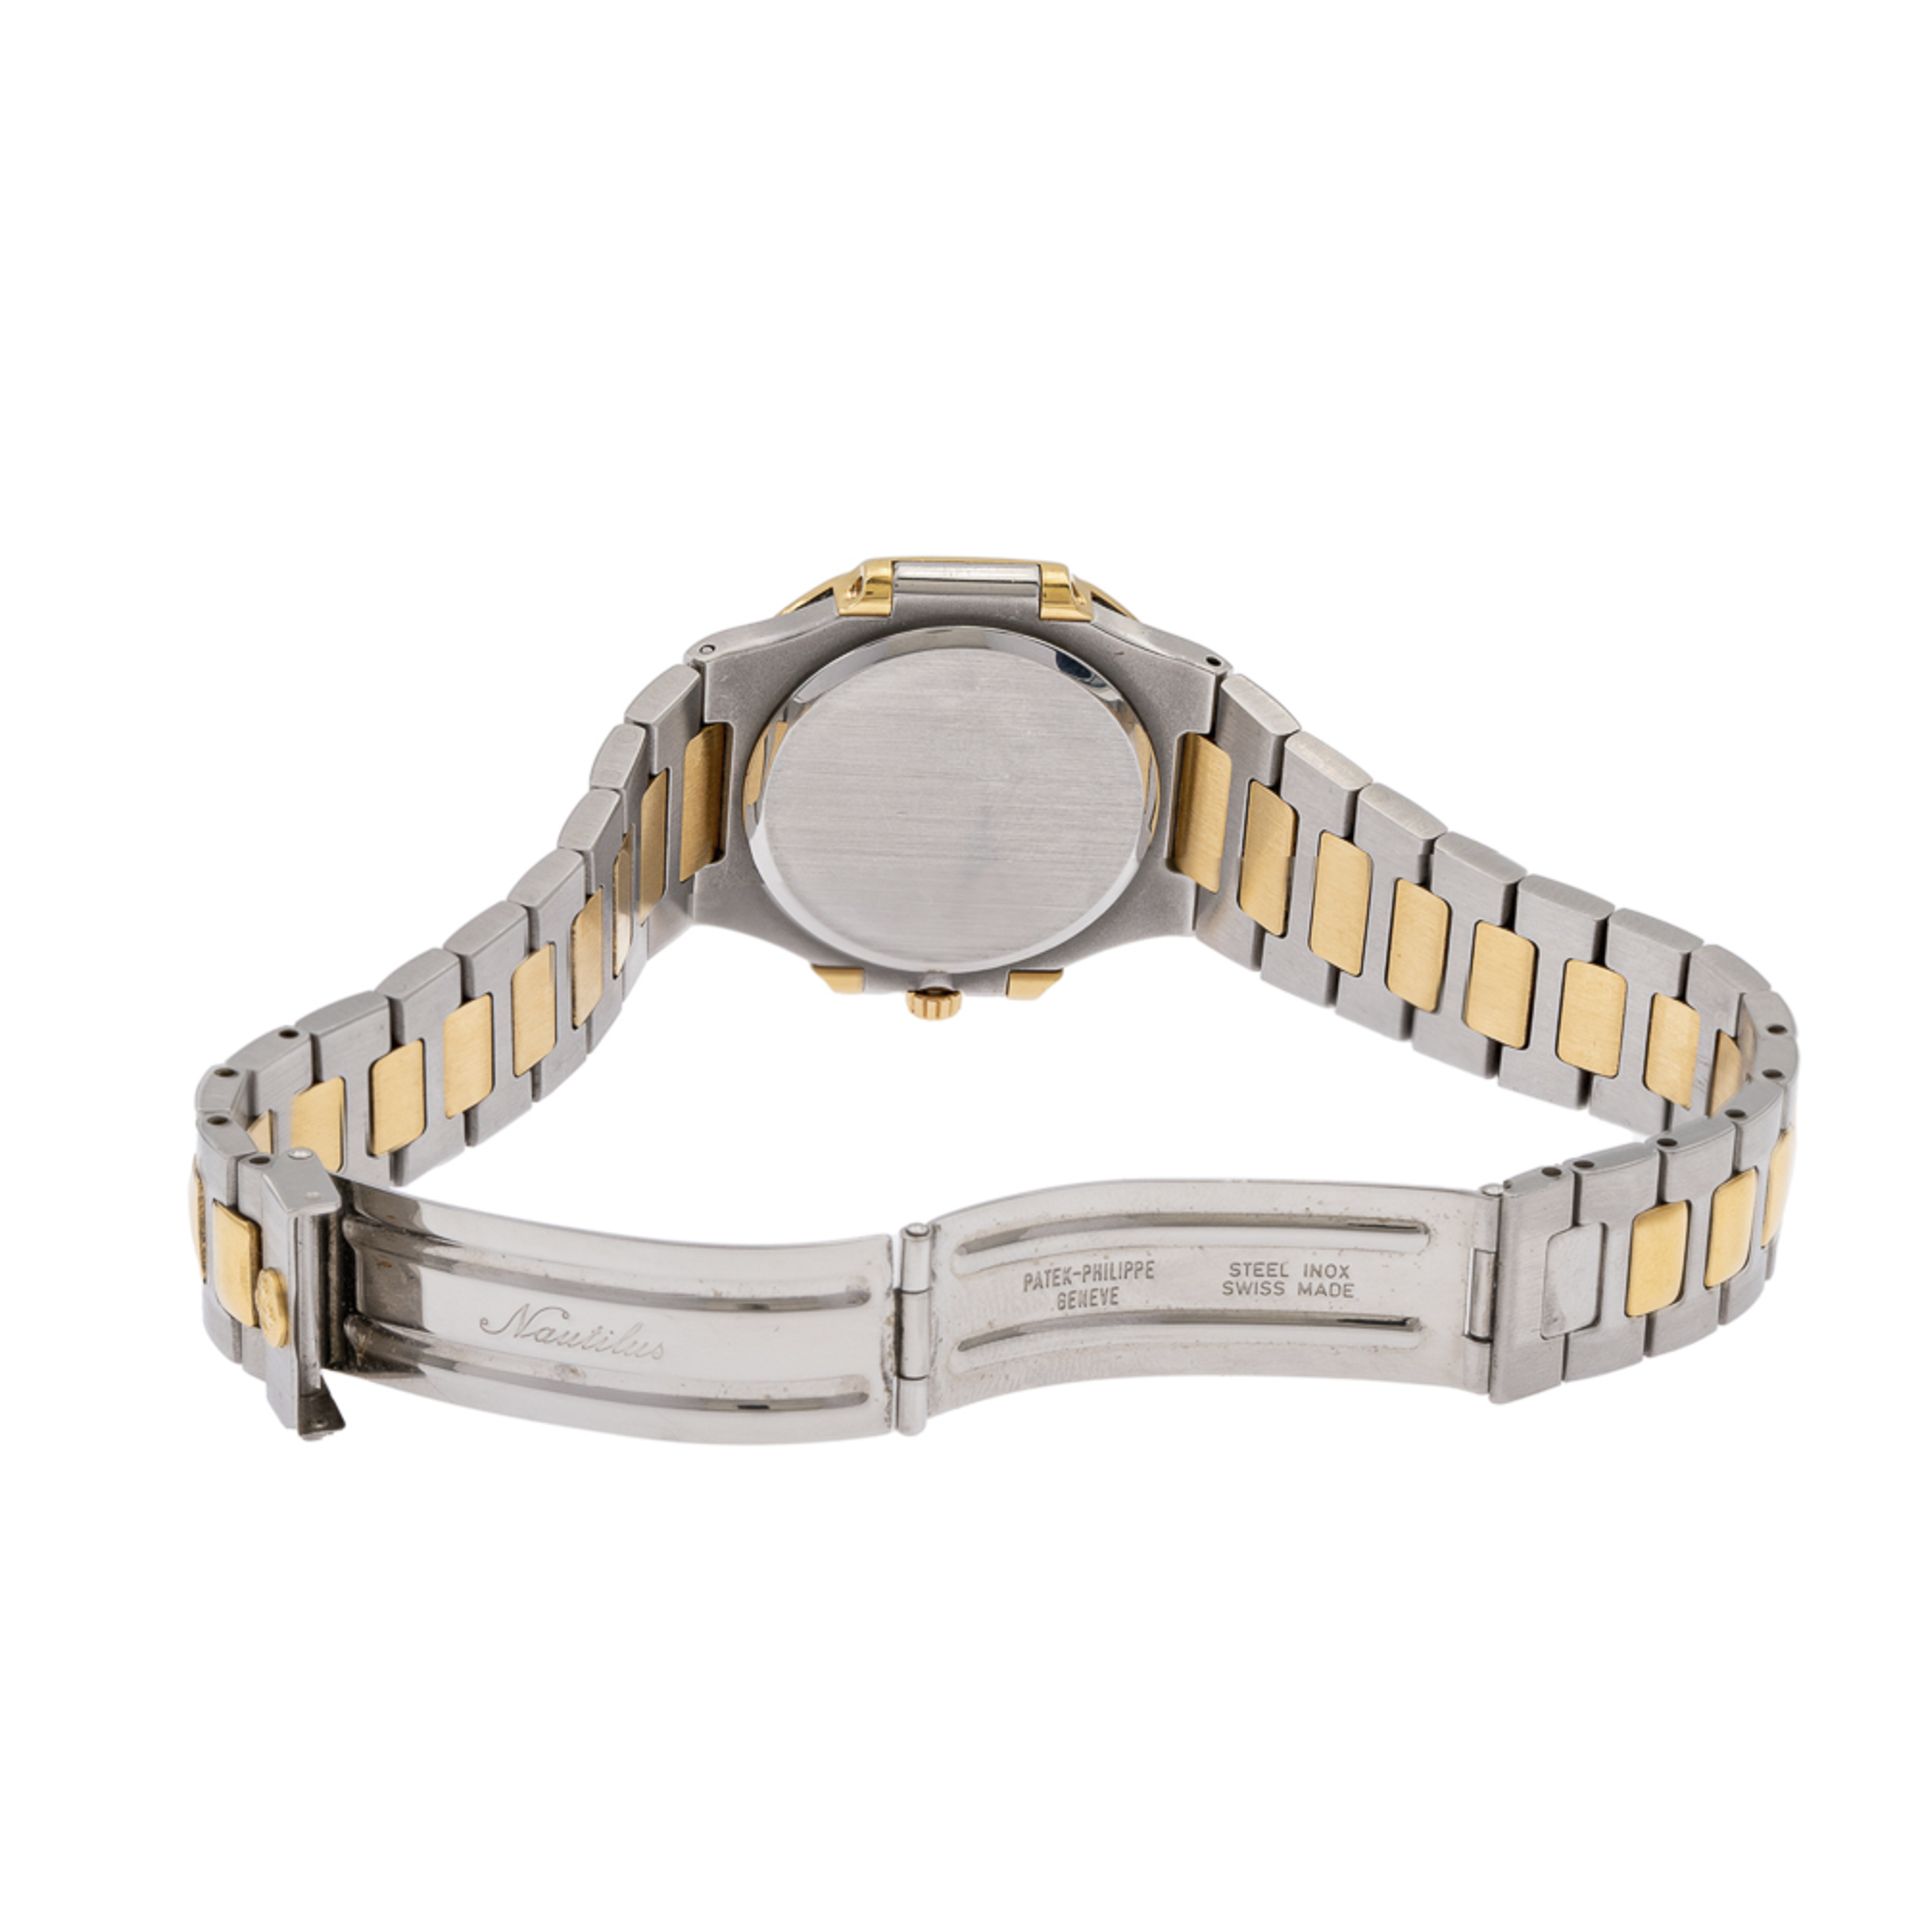 Patek Philippe Nautilus vintage wristwatch - Image 3 of 3